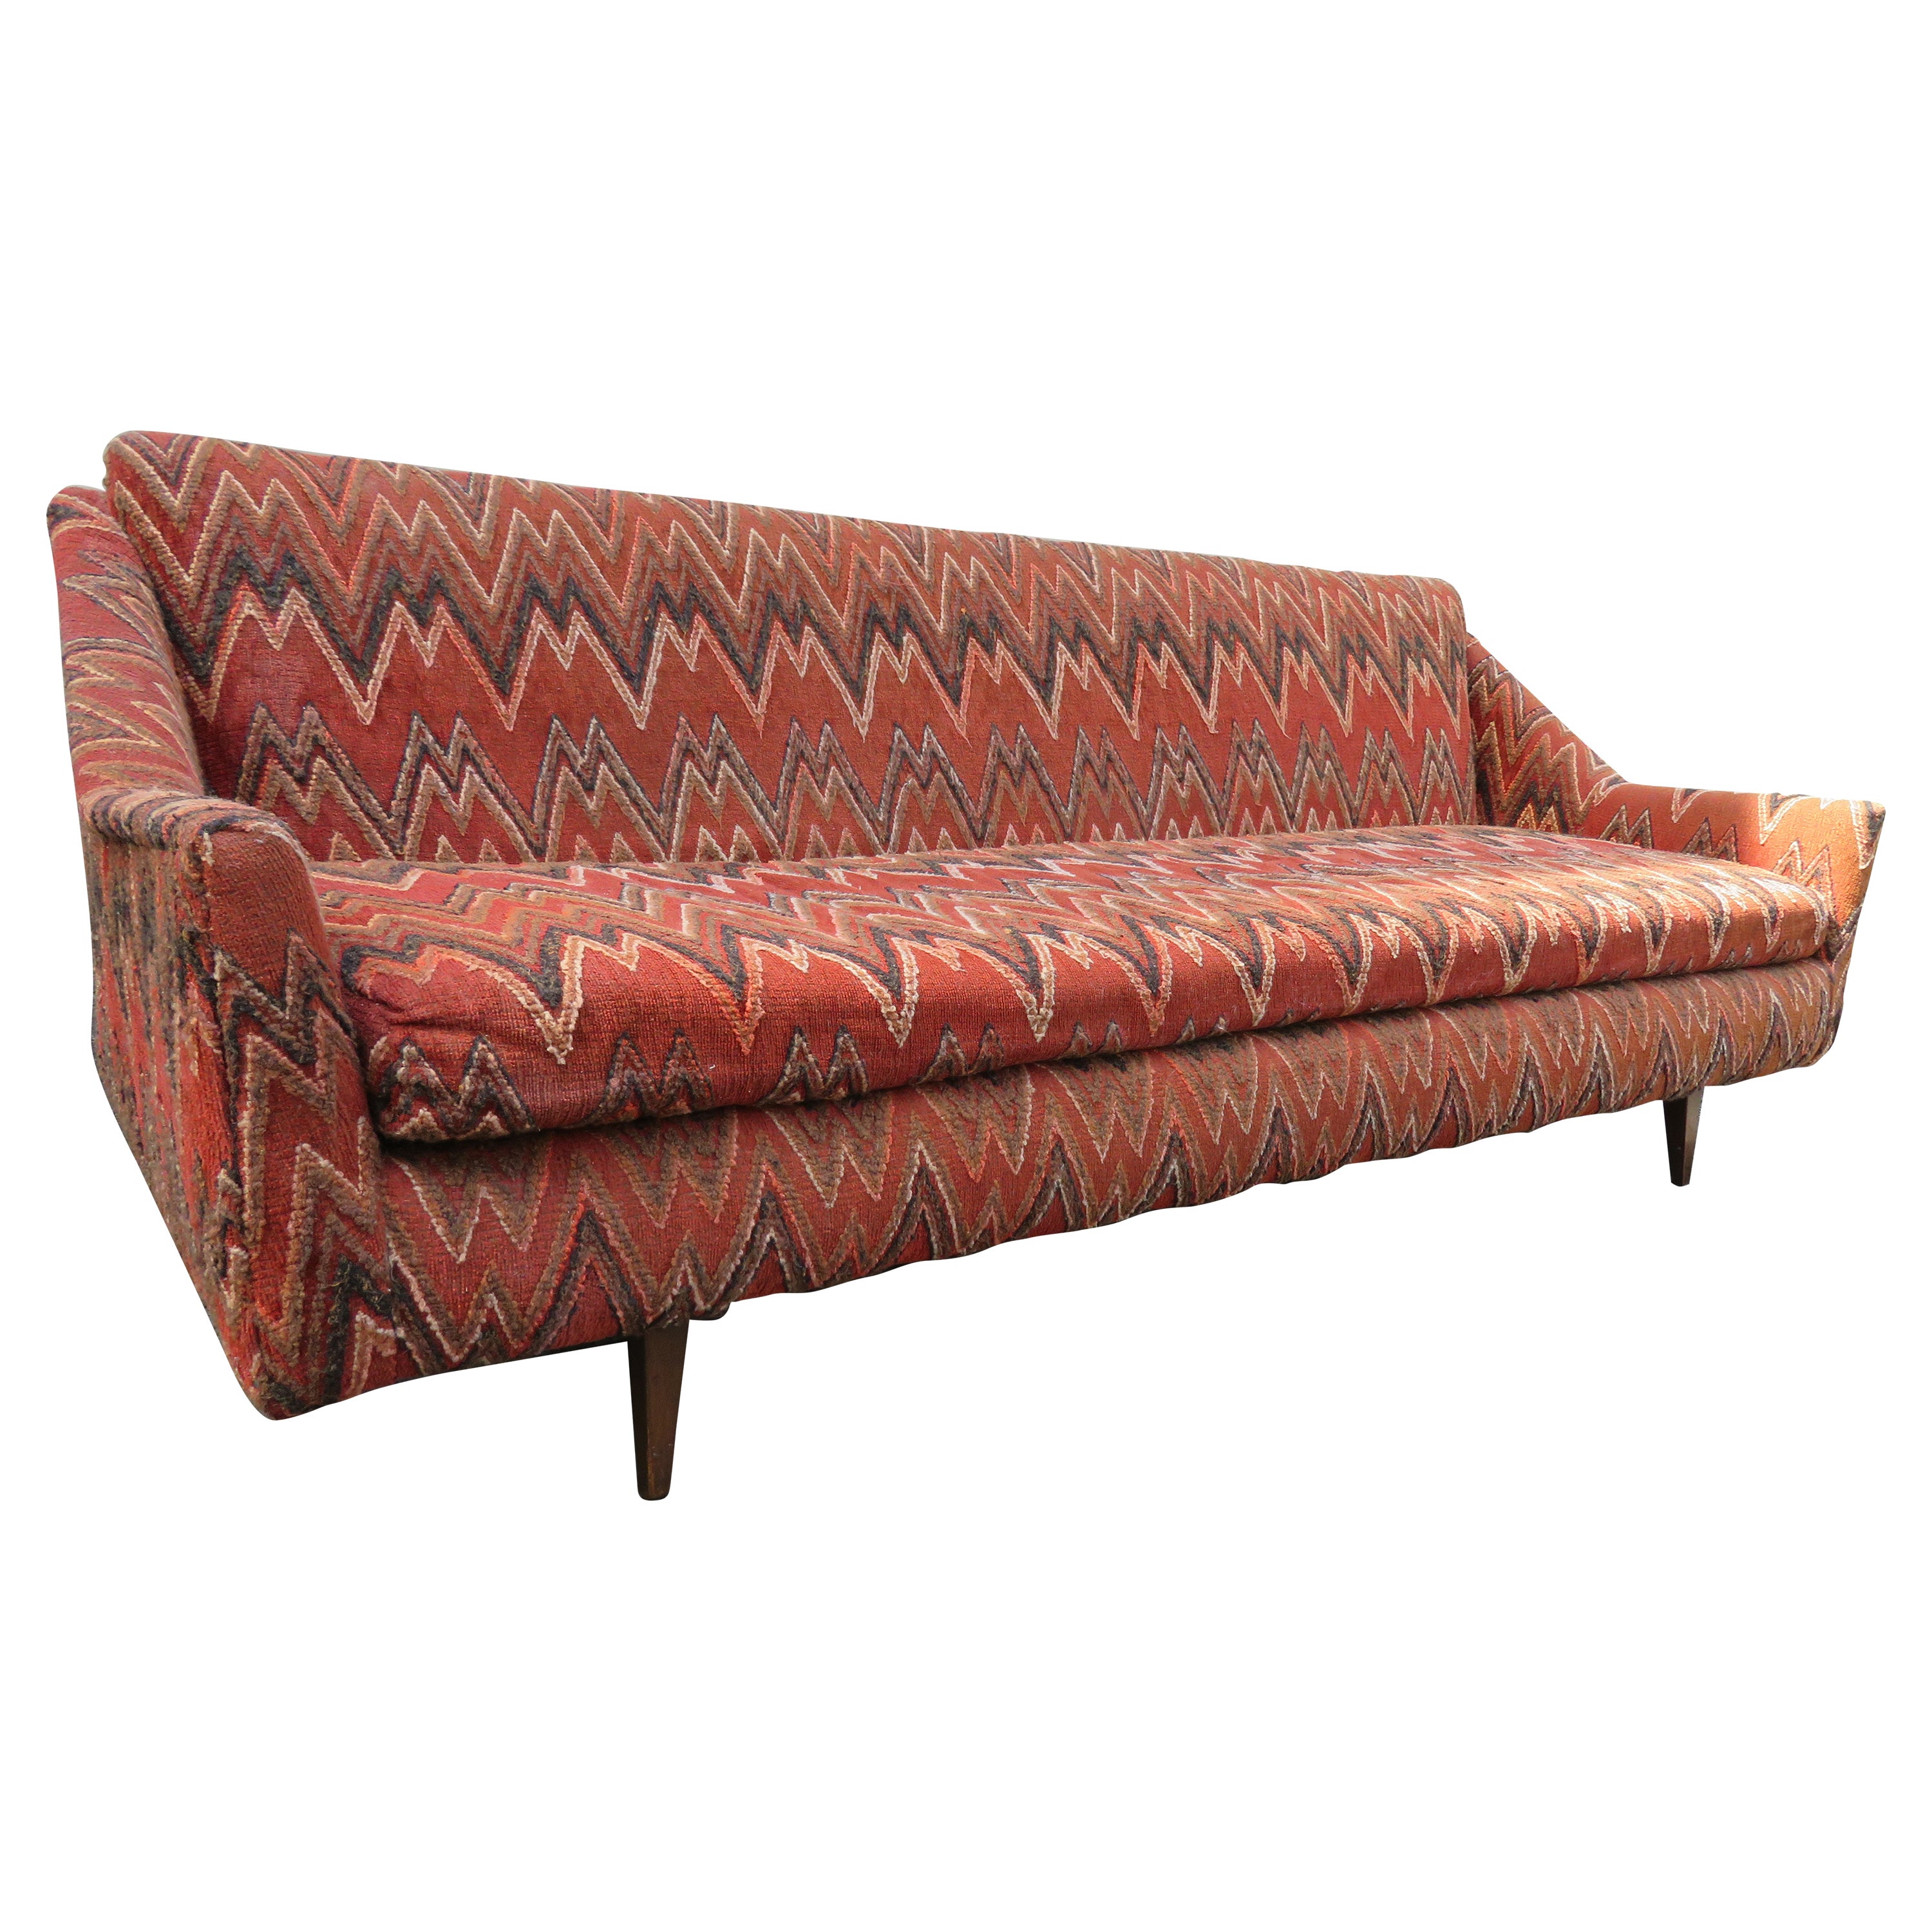 Wonderful Swedish Mid-Century Sofa Folke Ohlsson DUX Style, circa 60's